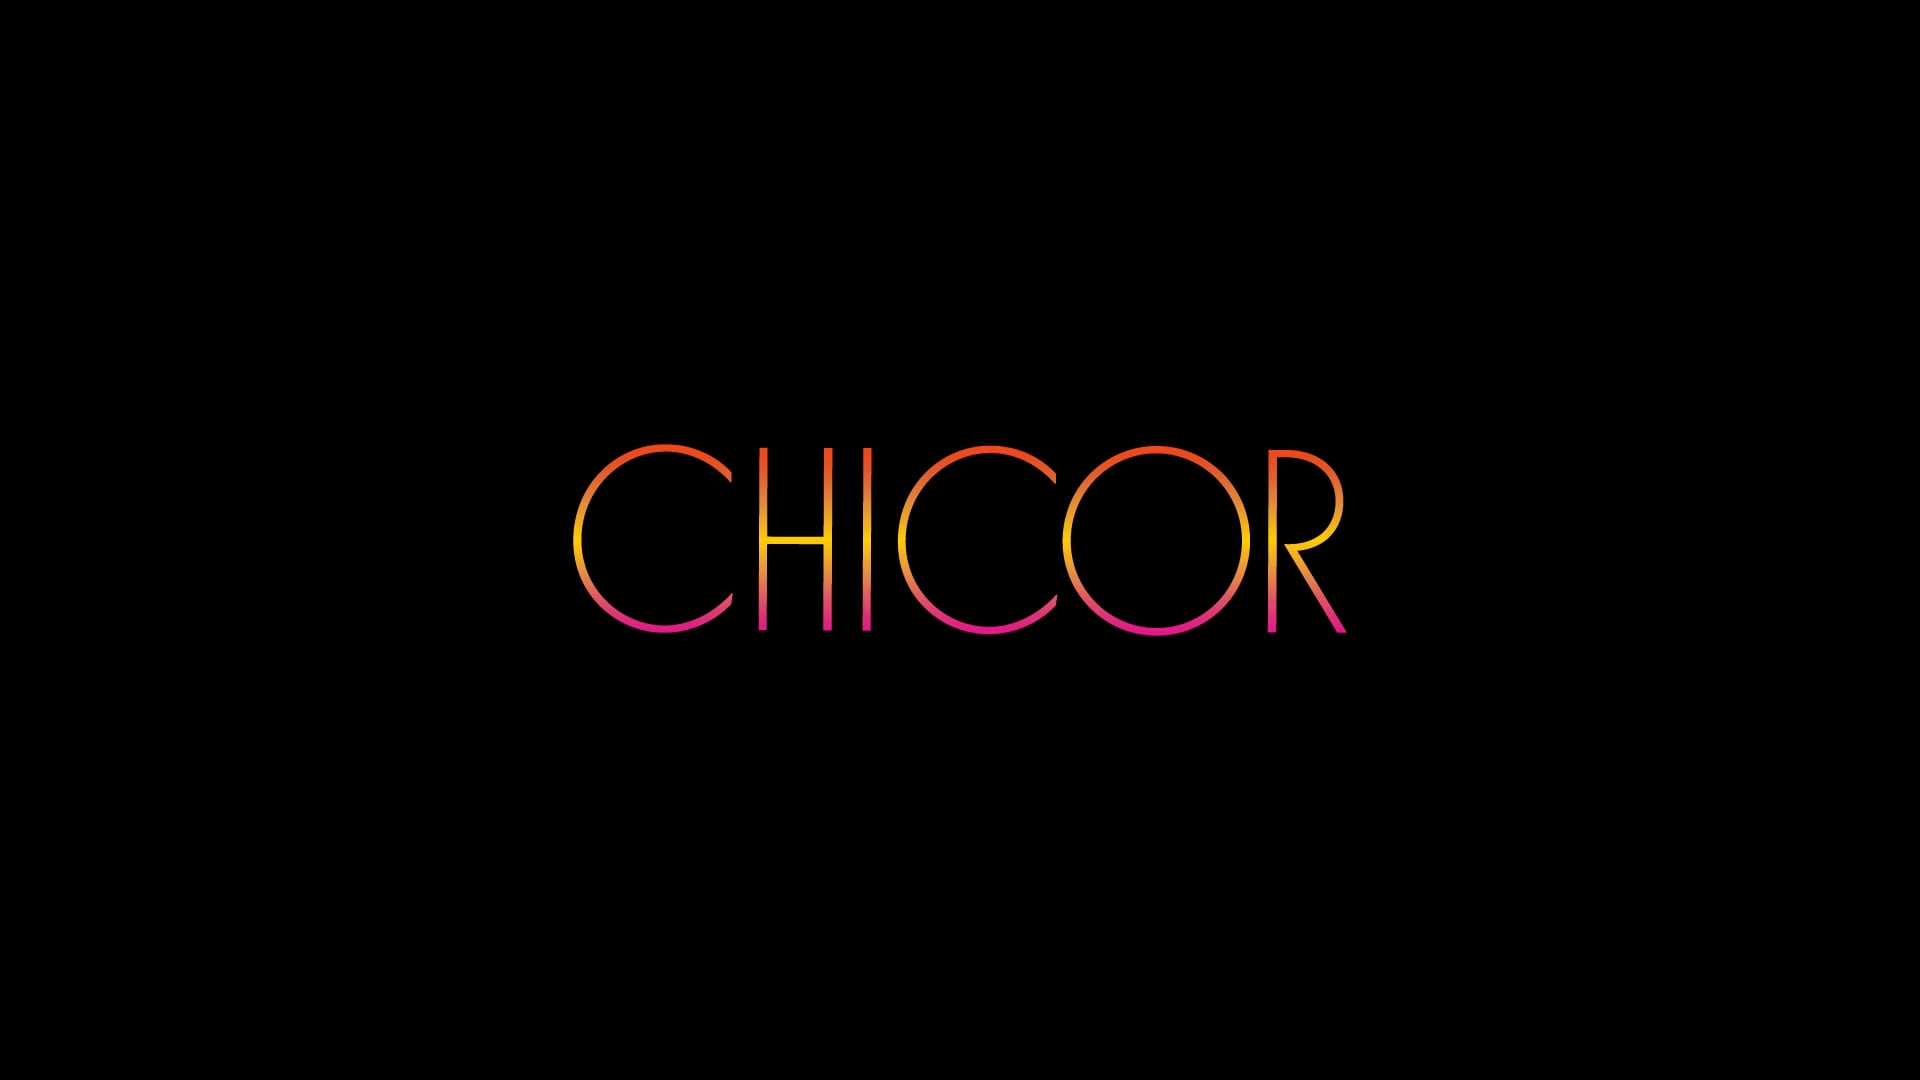 CHICOR - 2018 Brand Film